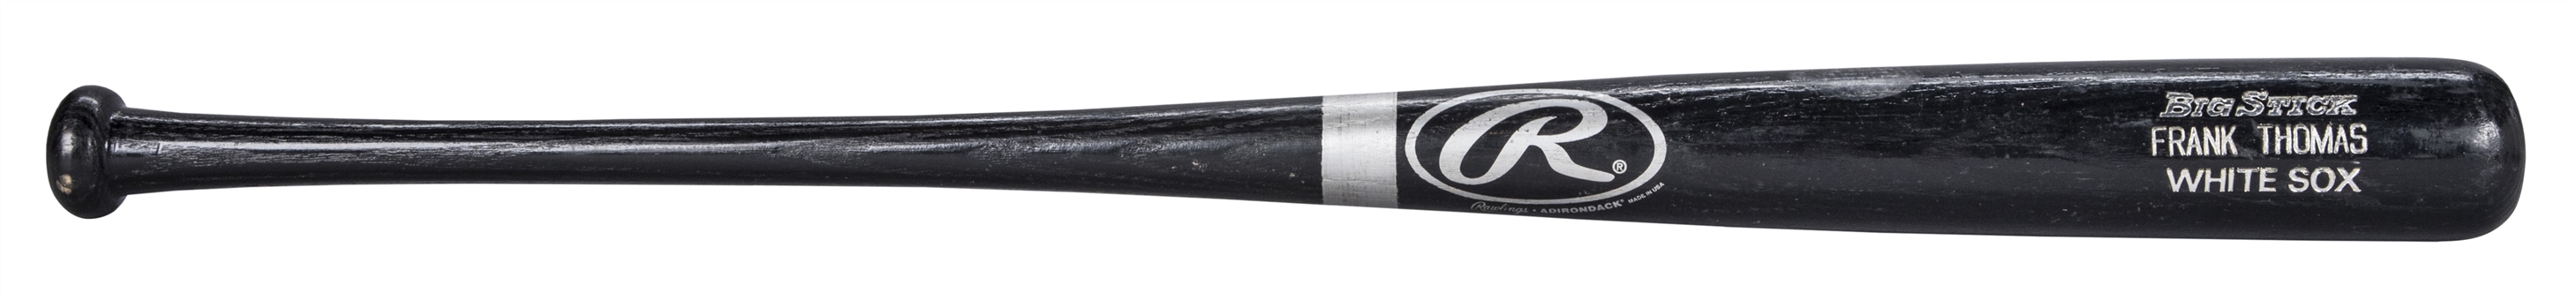 2000 Frank Thomas Game Used Rawlings 576B Model Bat (PSA/DNA GU 8)